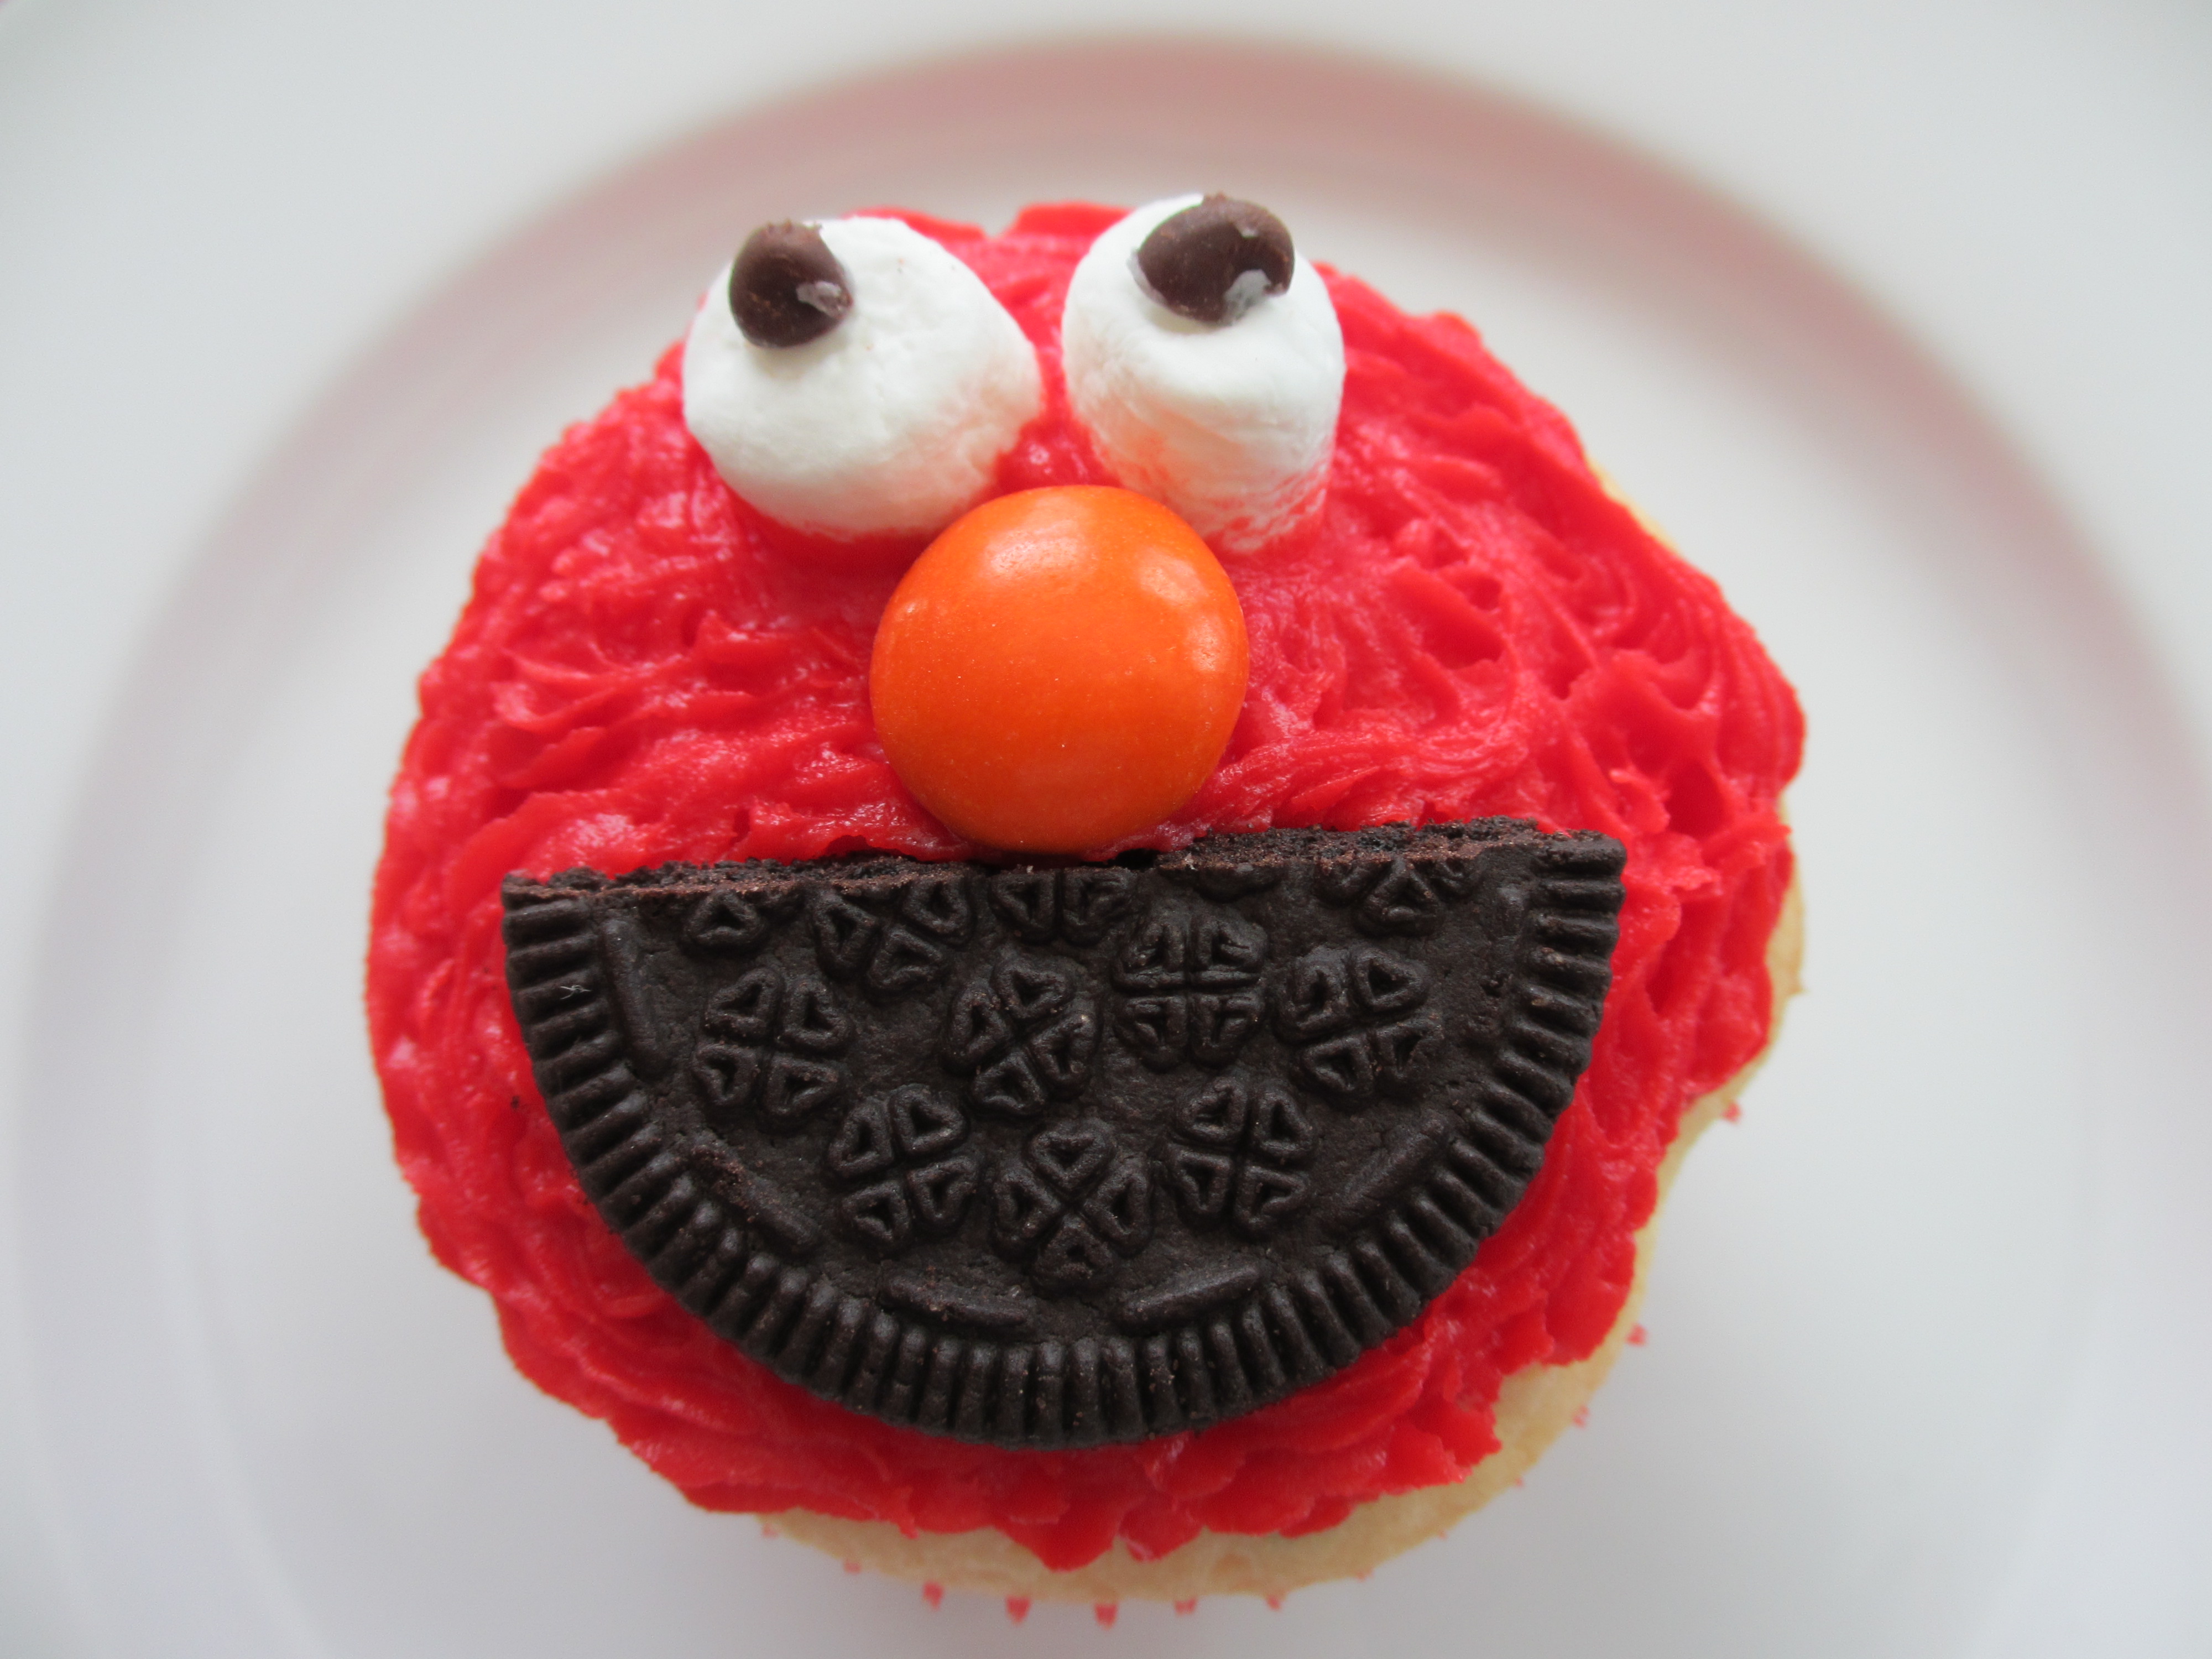 Elmo Cupcakes Pinterest